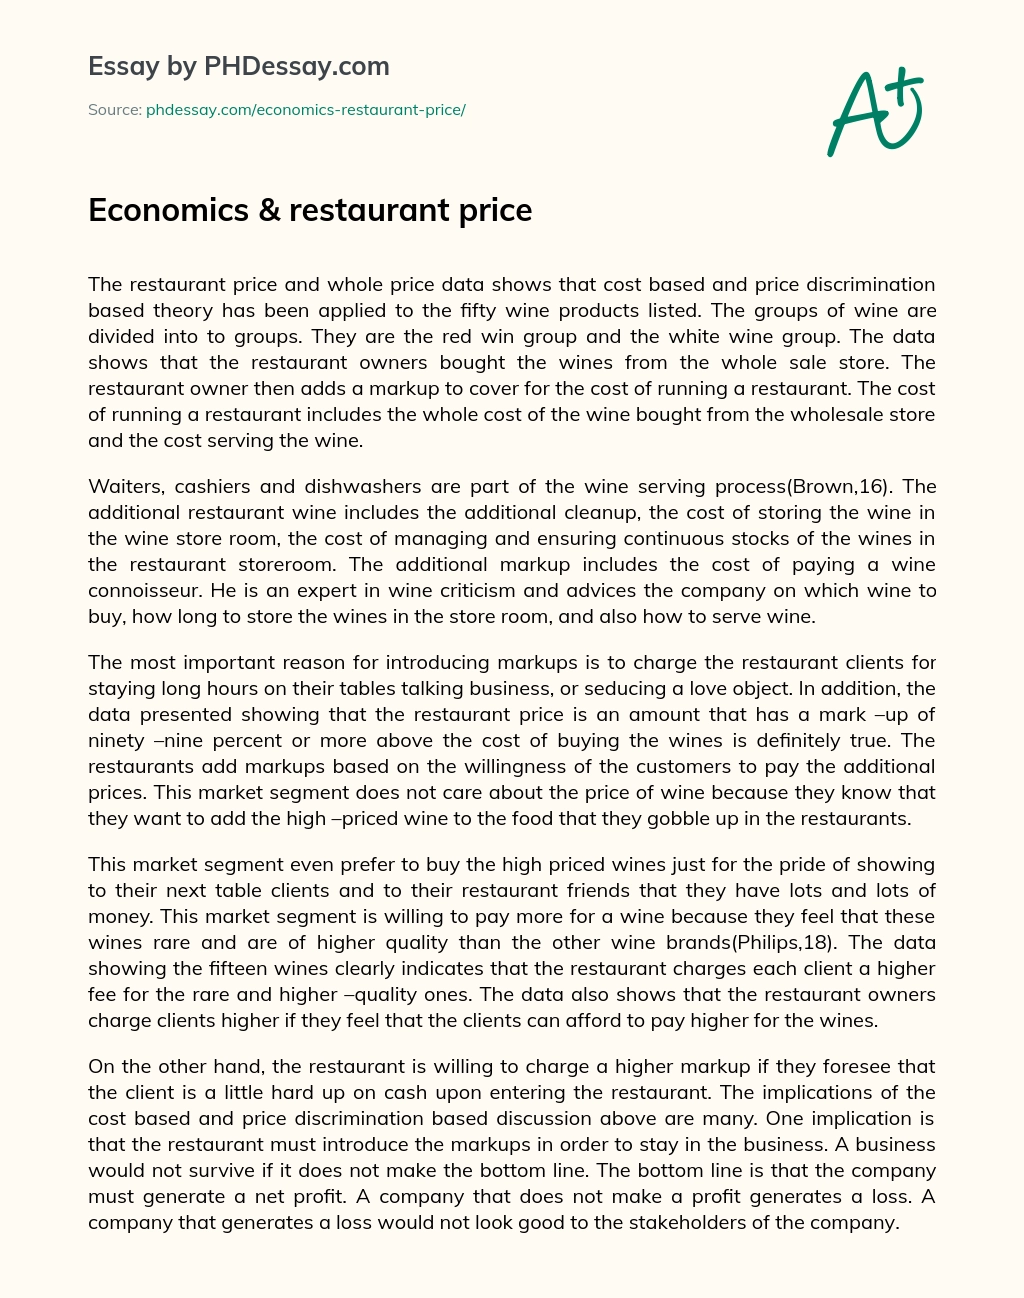 Economics & restaurant price essay